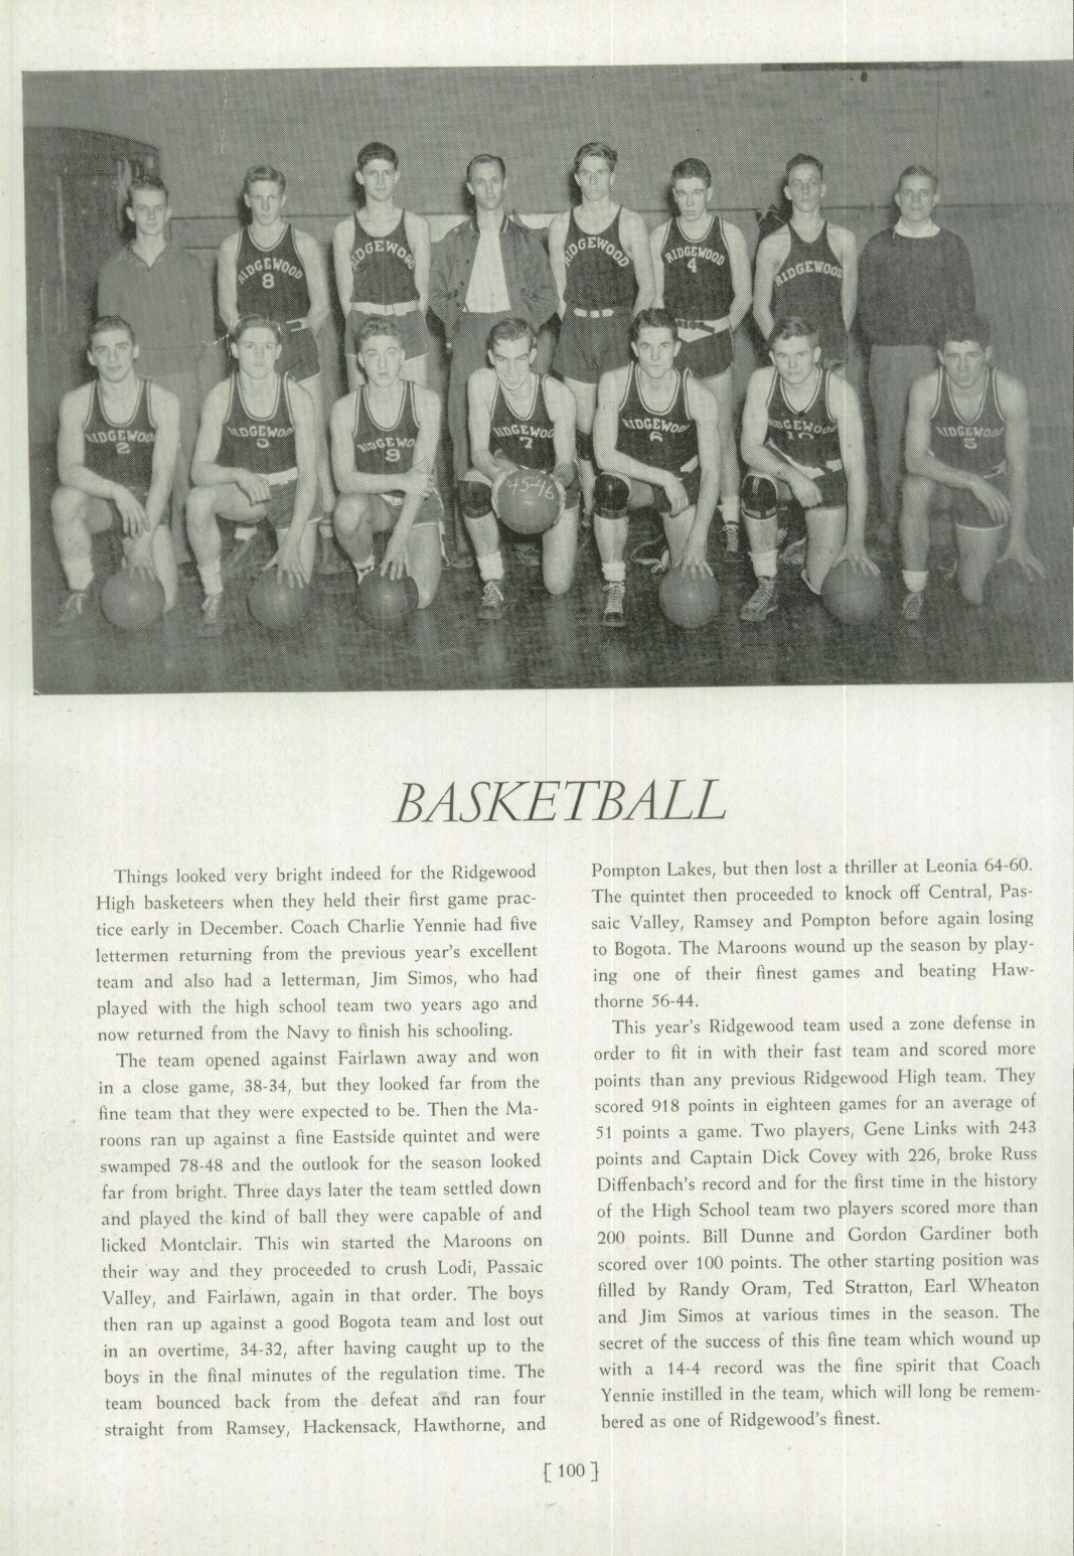 1946 Boys’ Basketball Team